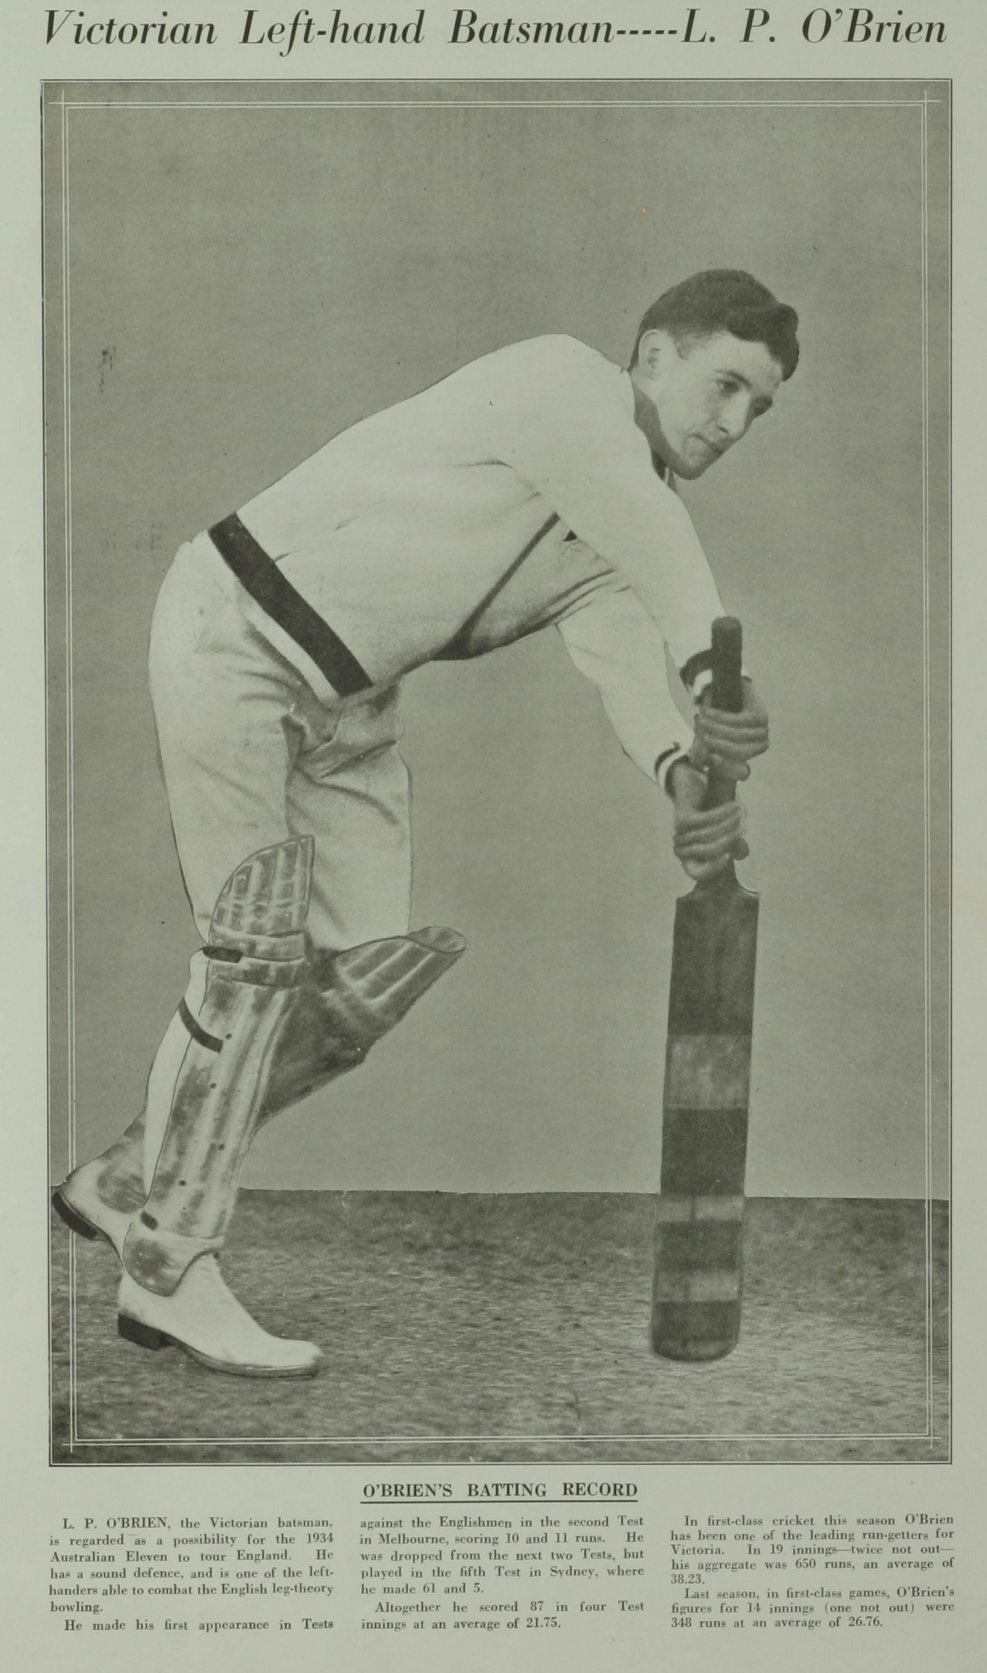 Victorian Left-hand Batsman. L.P. O'Brien - Vintage Print from 1933